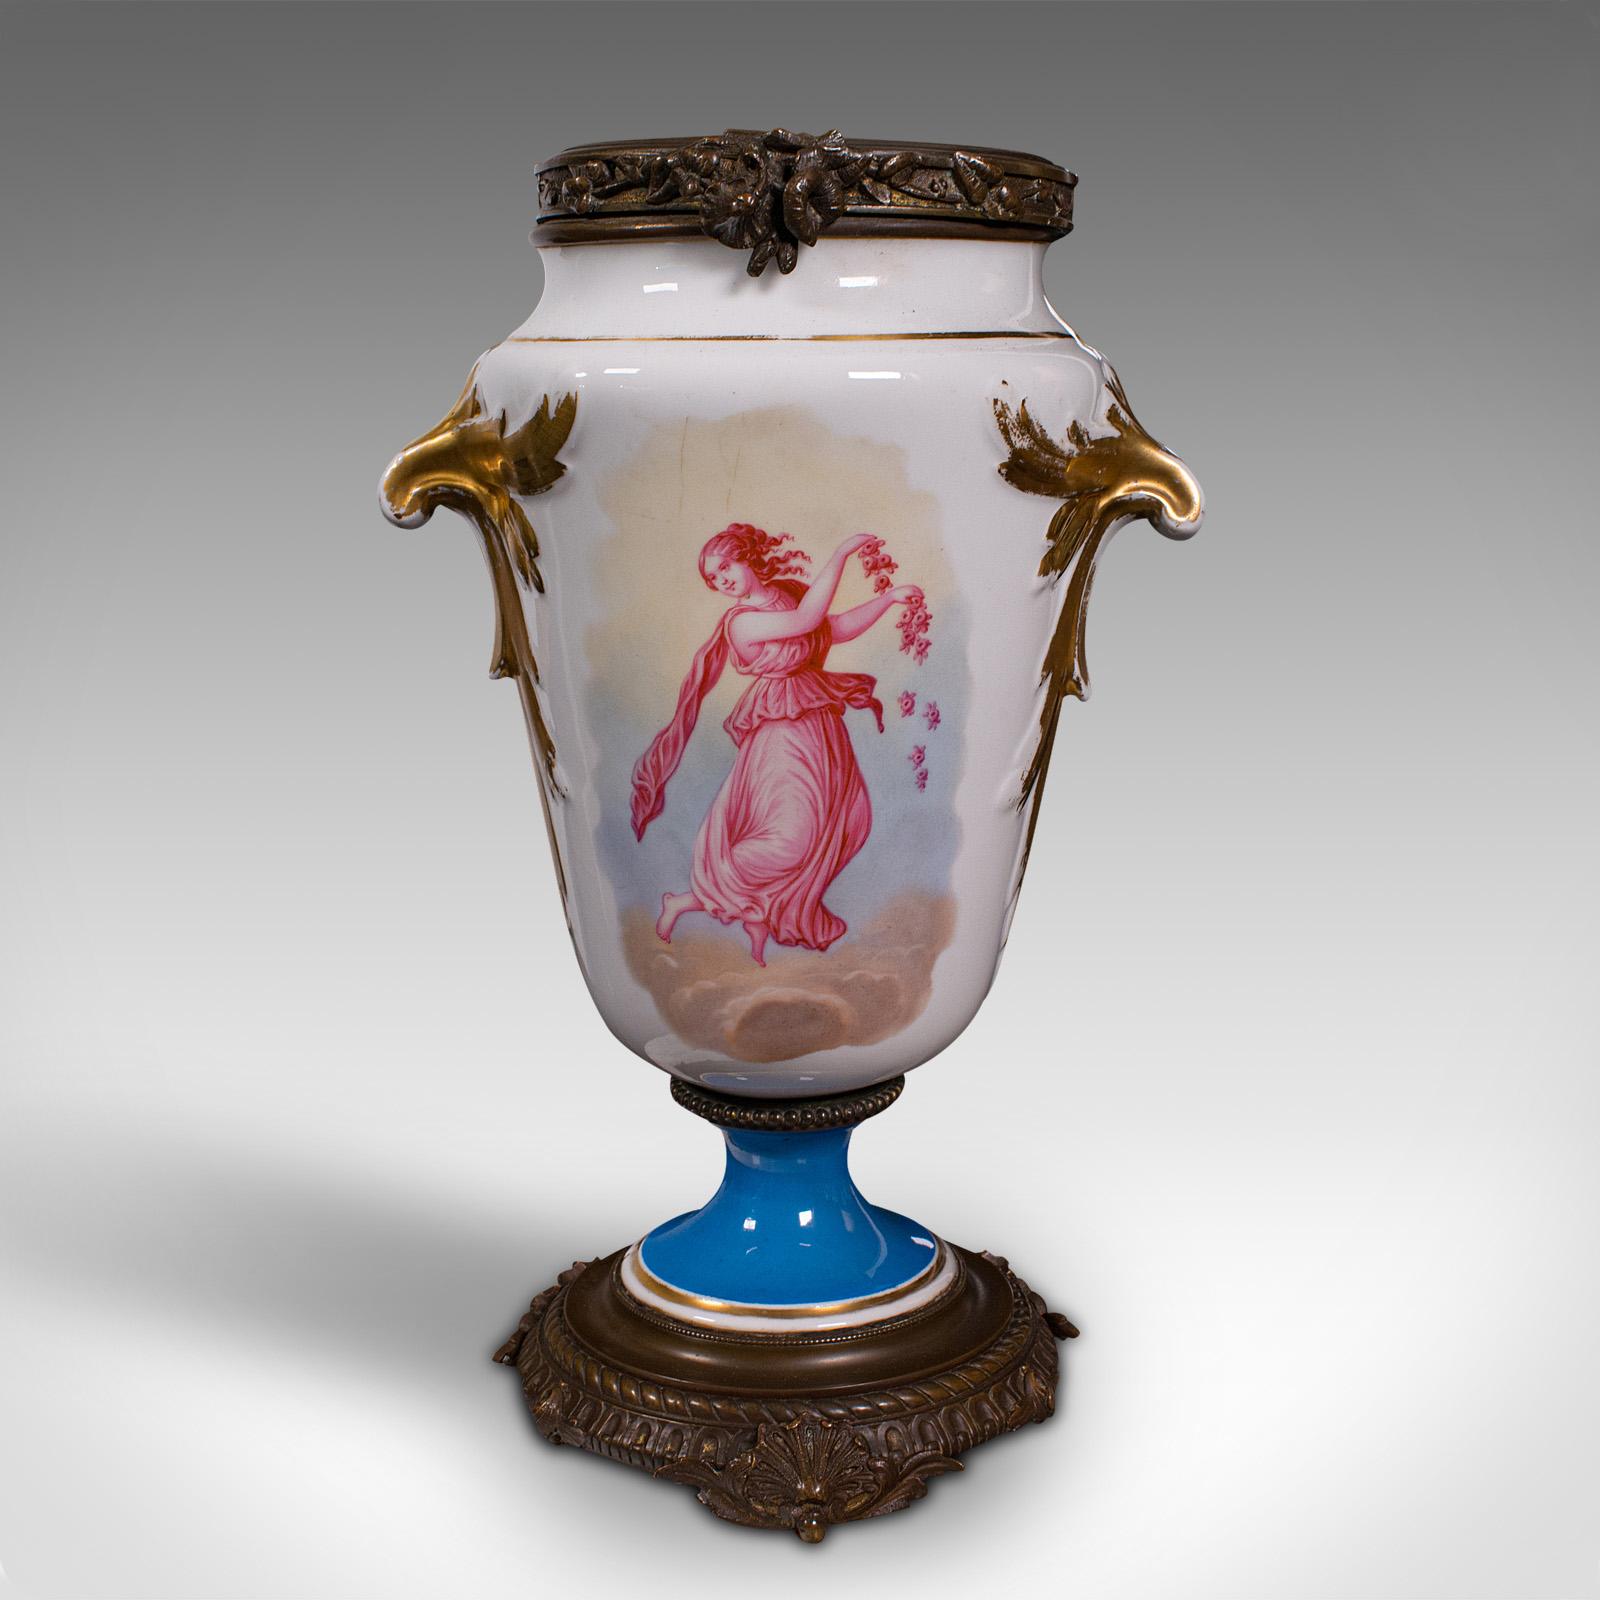 Antique Decorative Jardiniere, French, Ceramic, Display Planter, Vase, Victorian For Sale 2